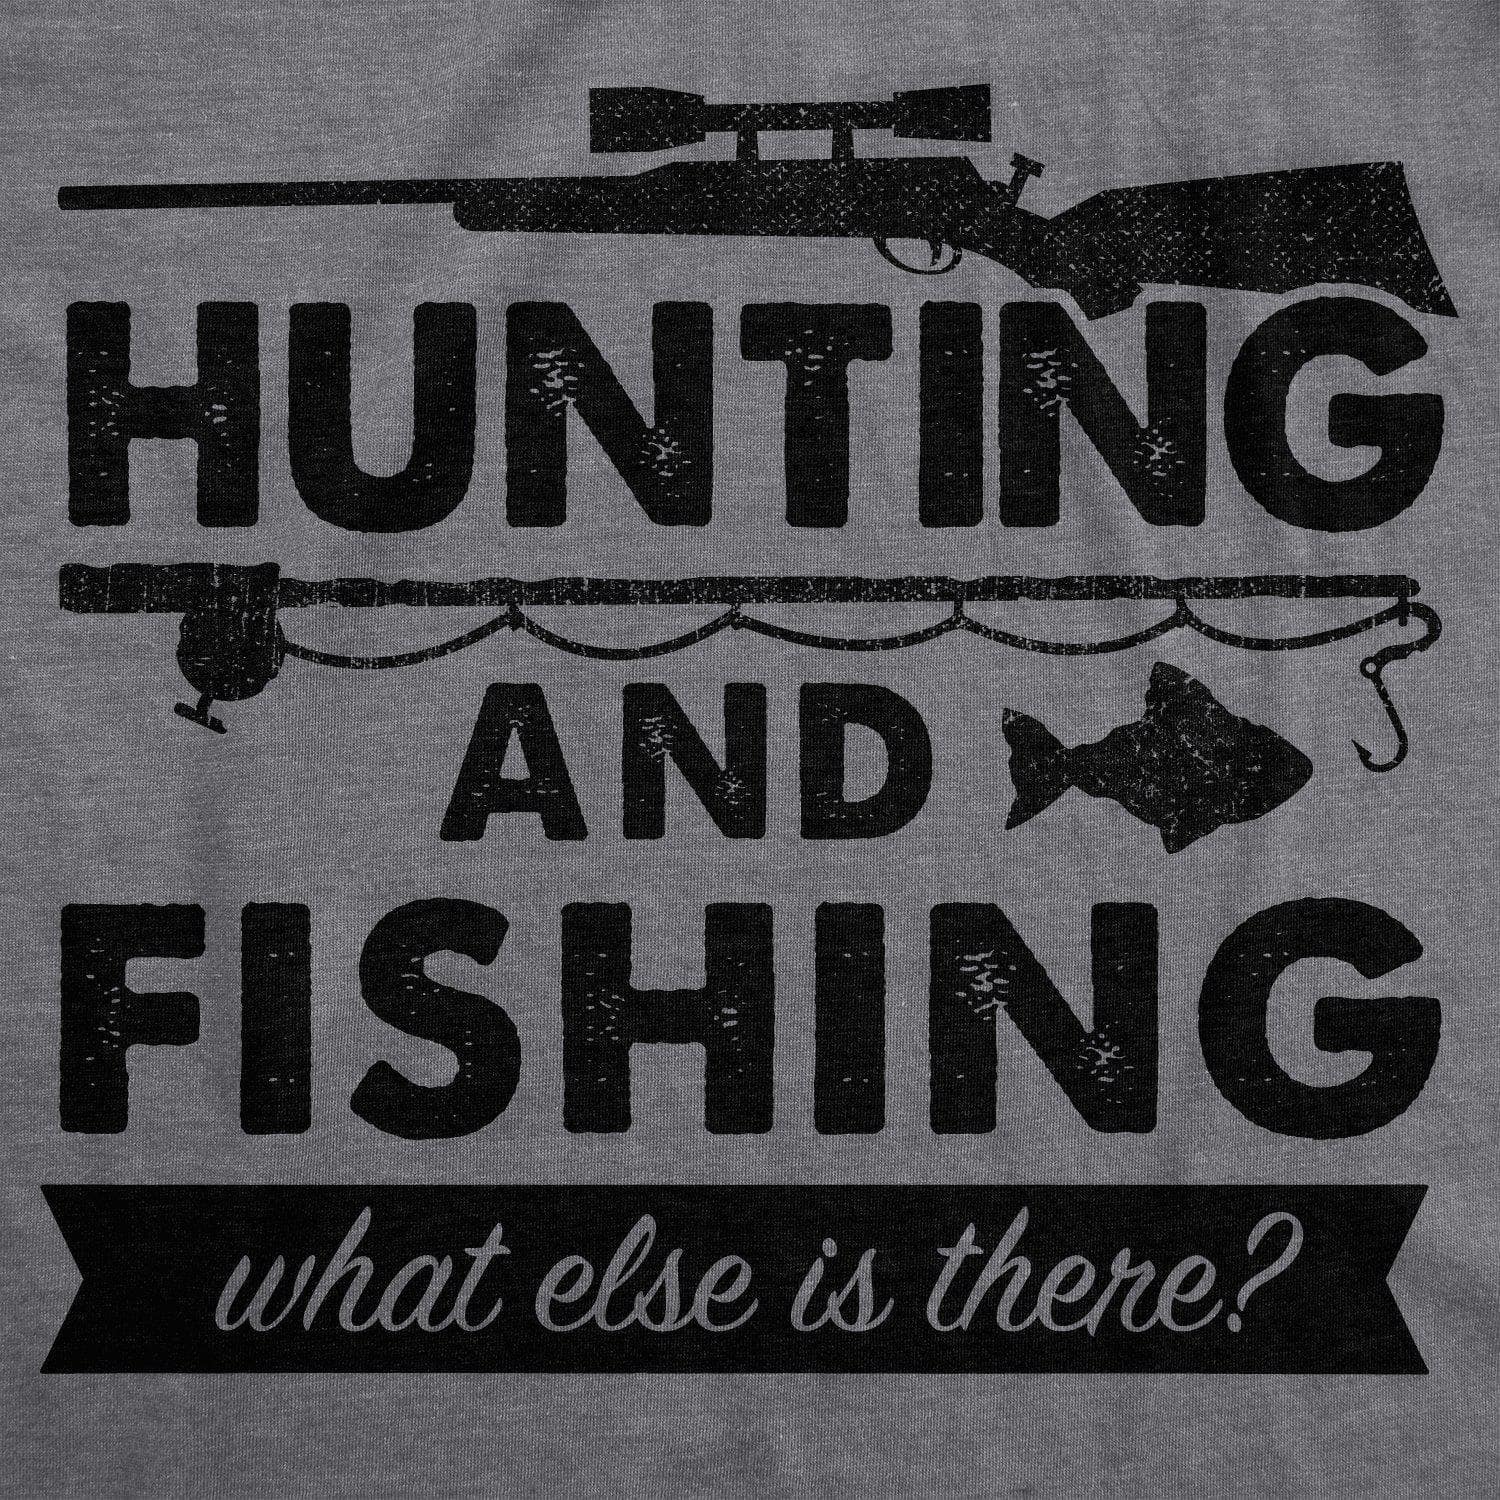 Hunting And Fishing Men's Tshirt  -  Crazy Dog T-Shirts